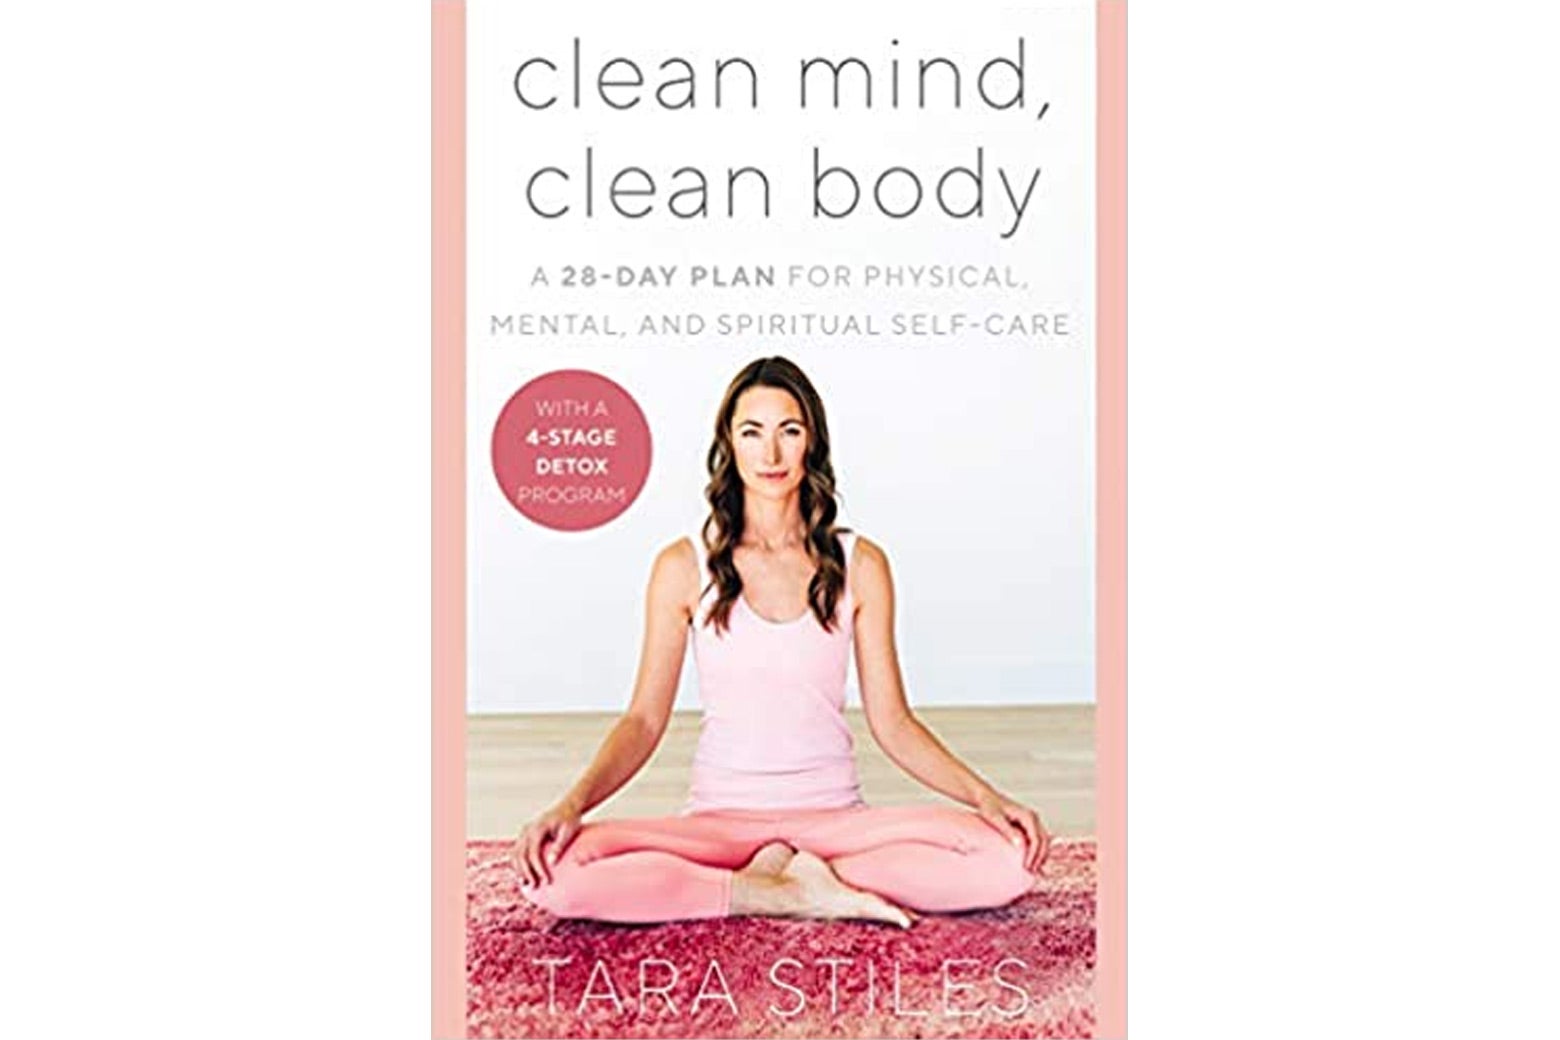 Clean Mind, Clean Body book cover